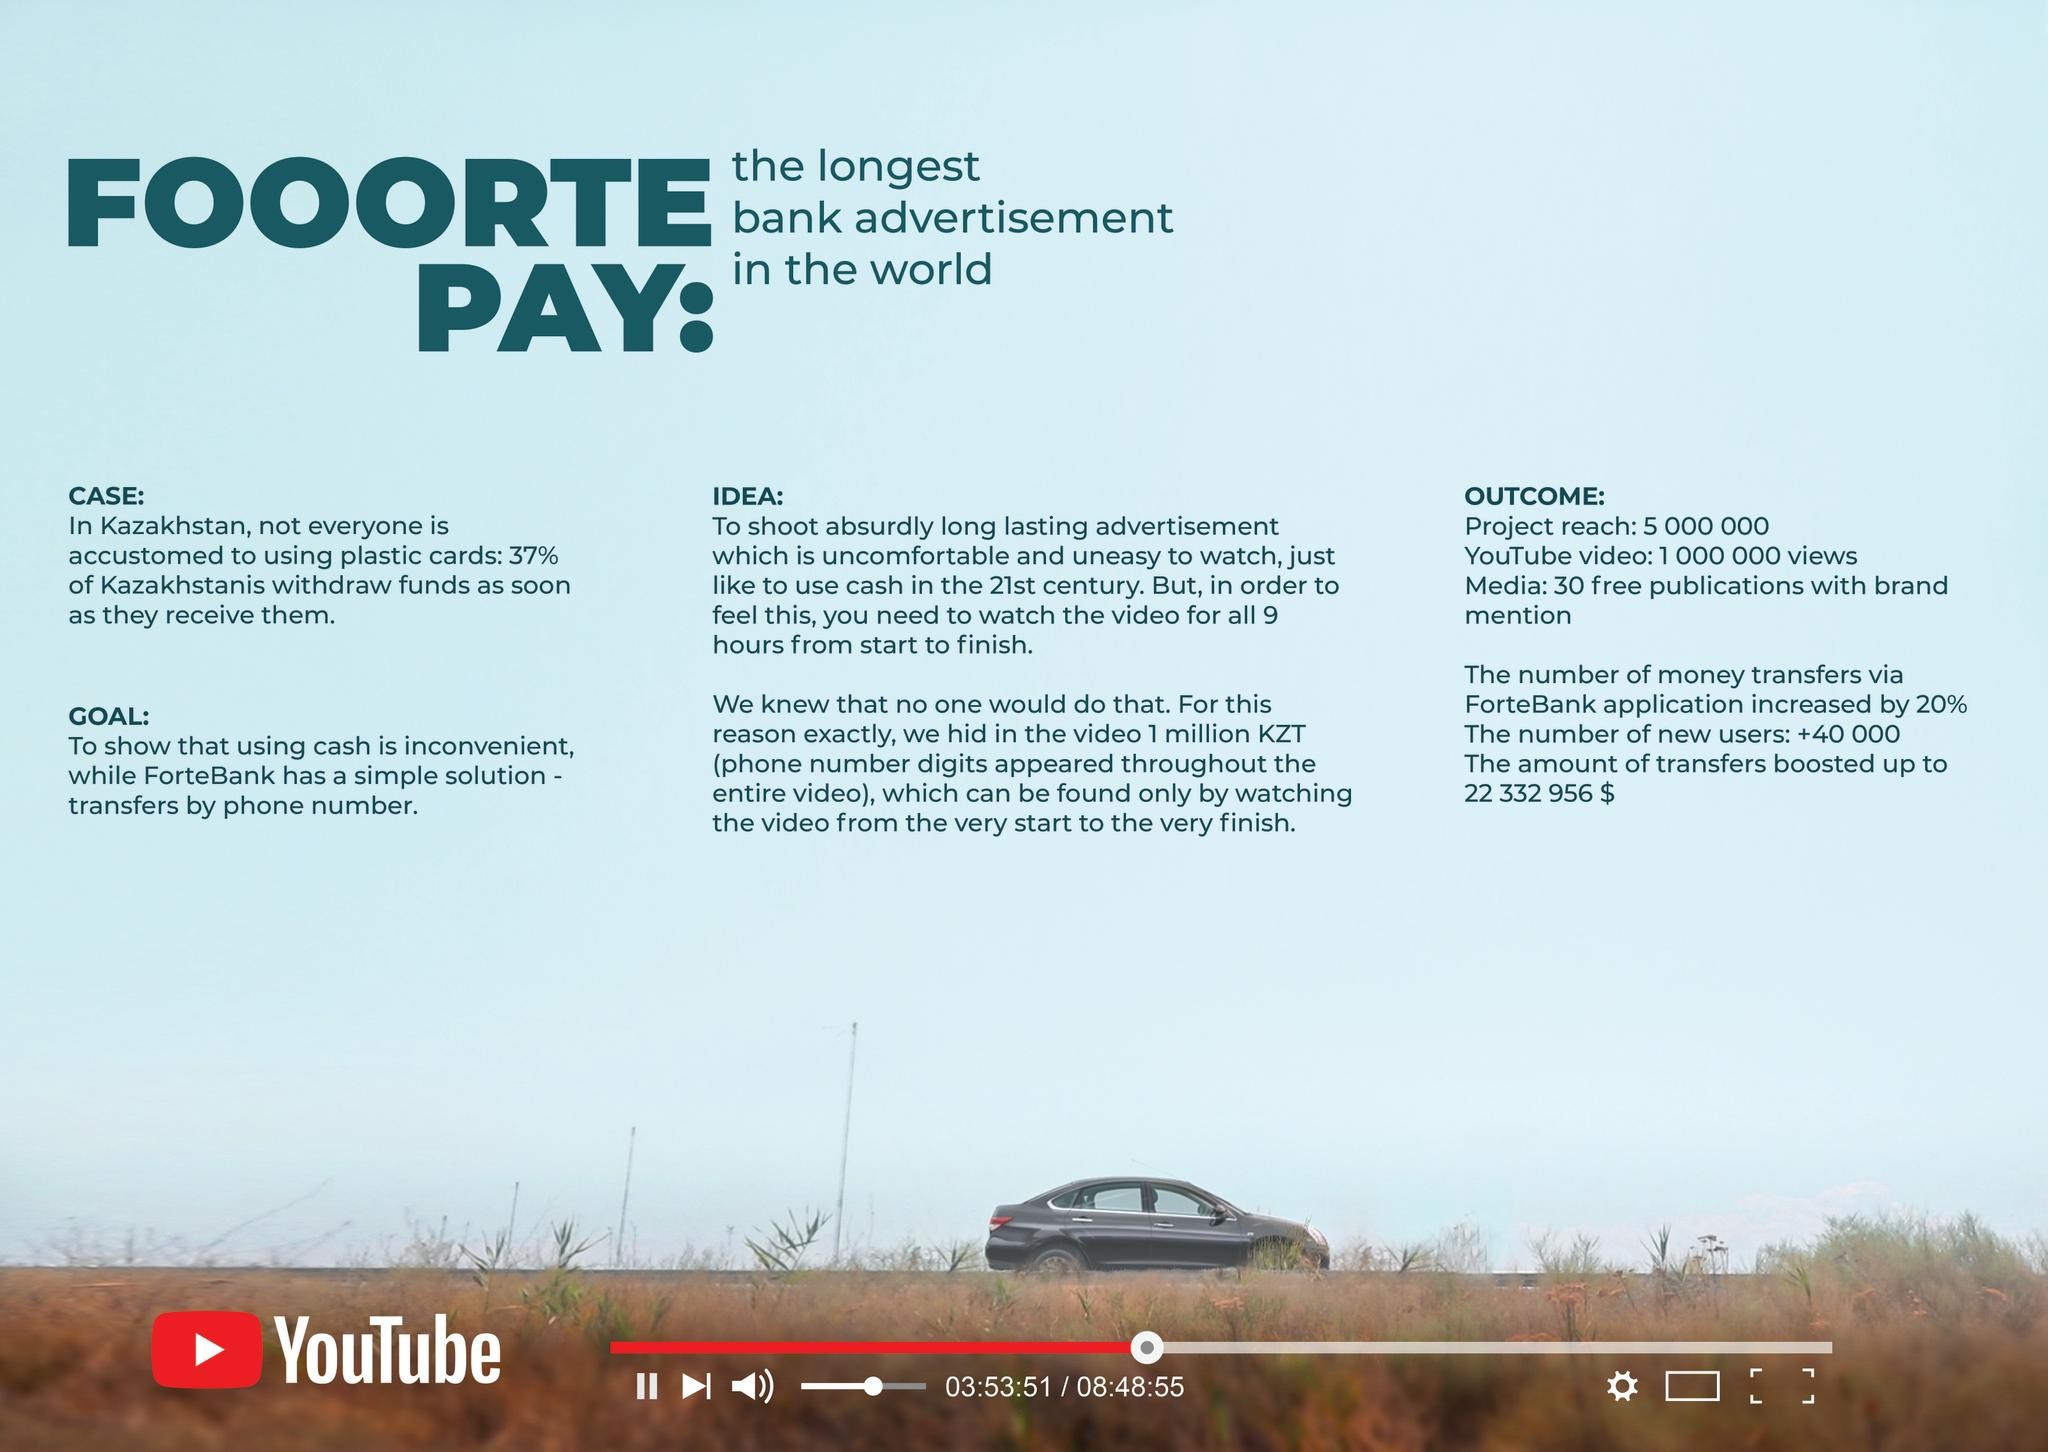 FooortePay: the longest bank advertisement in the world